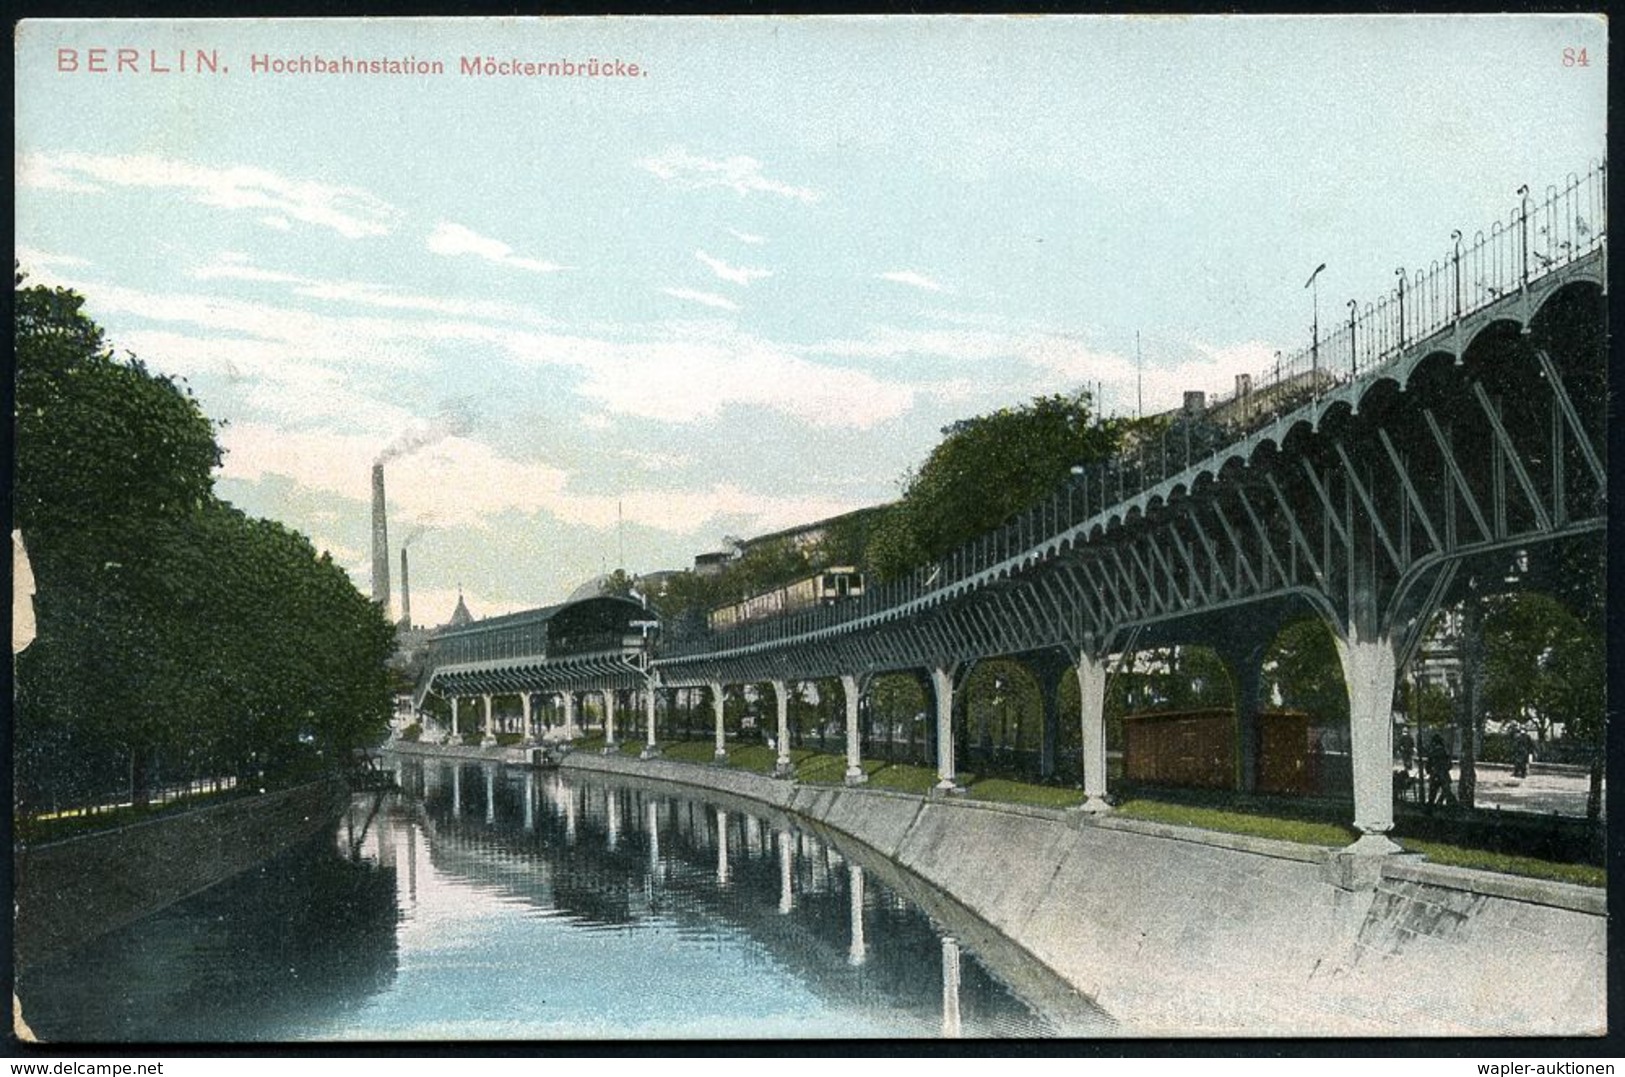 UNTERGRUNDBAHN /U-BAHN : Berlin-Kreuzberg 1902/11 U-Bahnhof Möckernbrücke, 7 verschiedene s/w.- u. Color-Foto-Ak. , teil